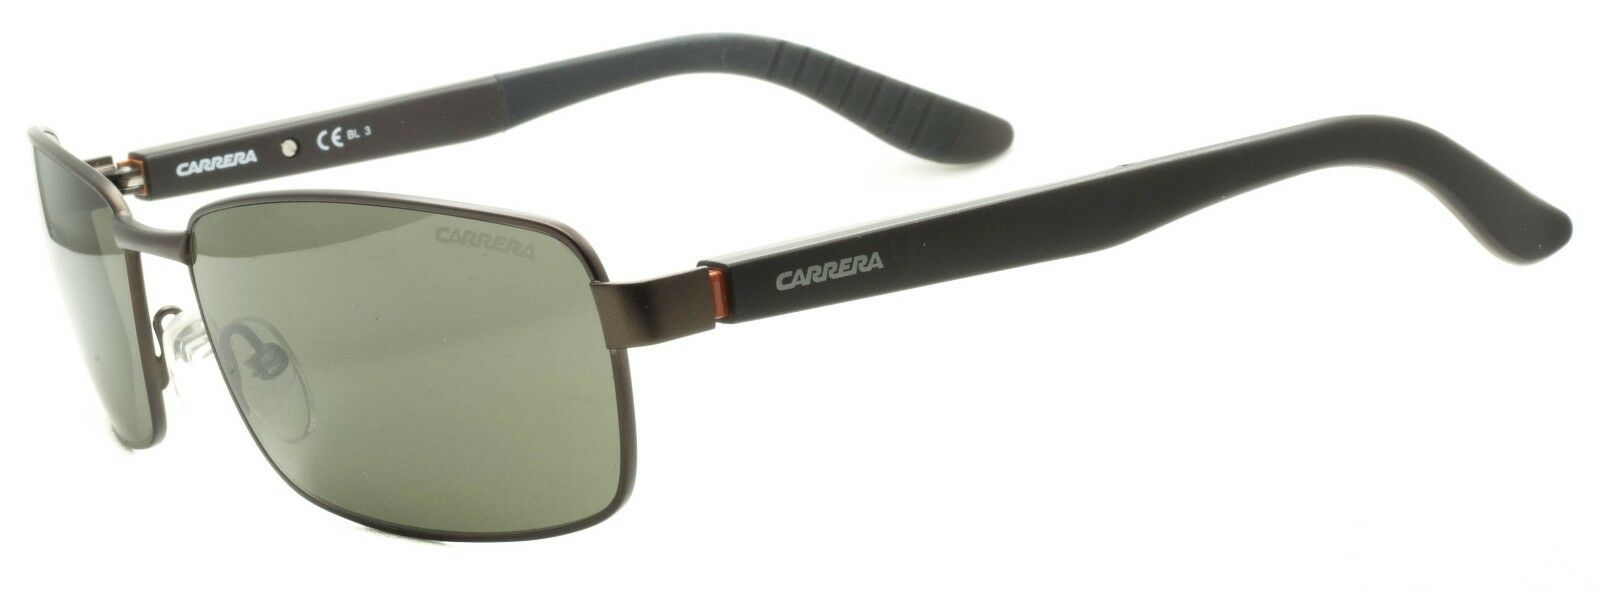 CARRERA 8004/FS 0RP70 62mm Eyewear Sunglasses Glasses FRAMES Shades - Brand New